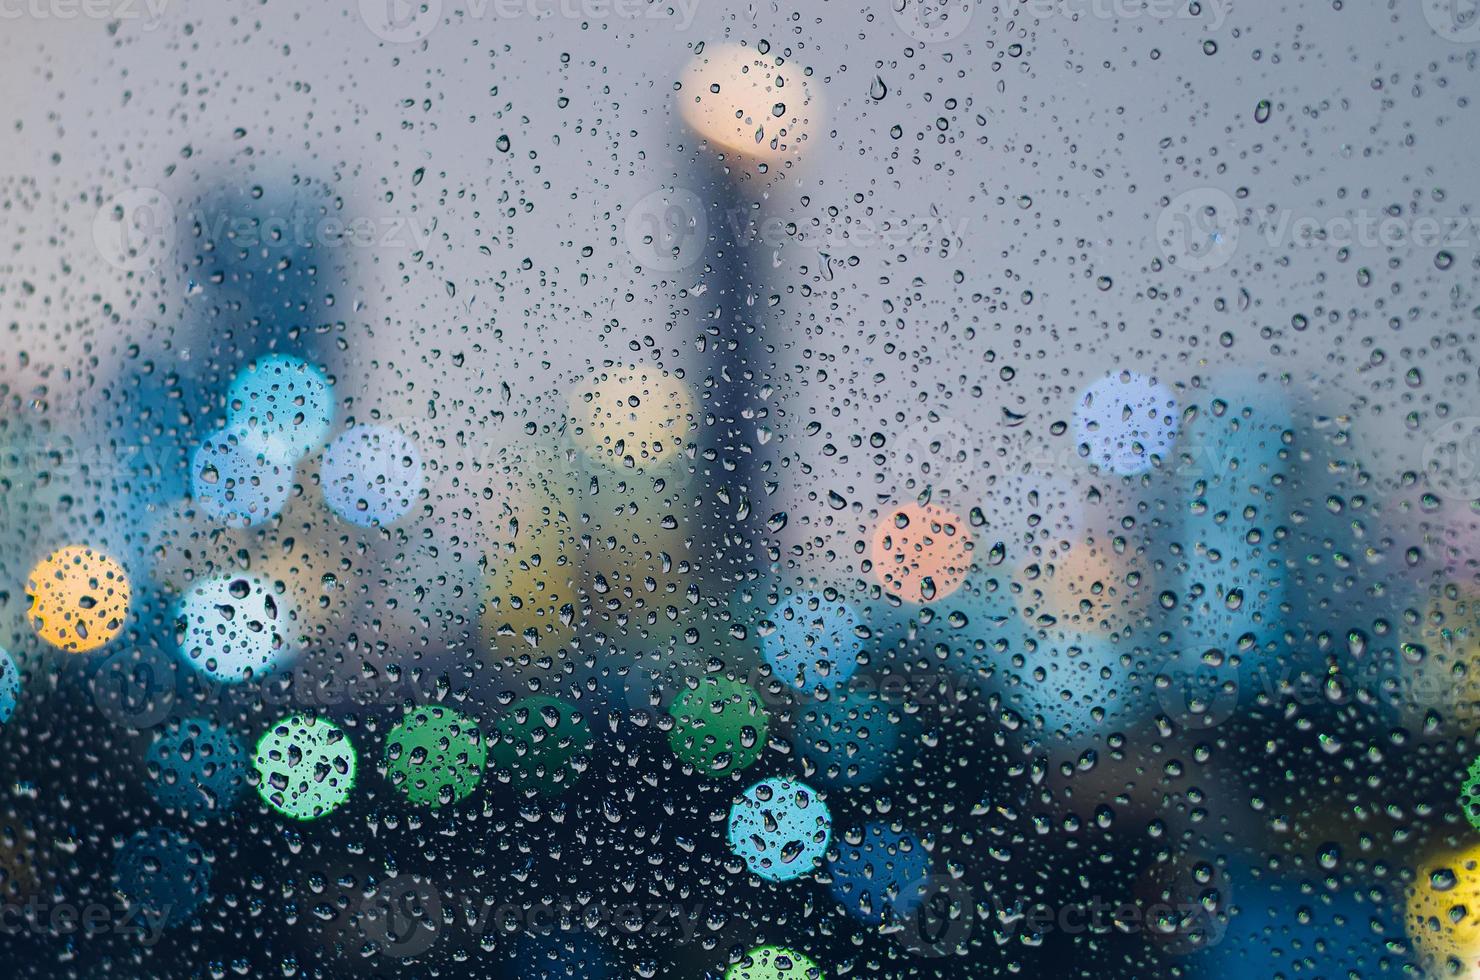 Rain drop on glass window in monsoon season photo